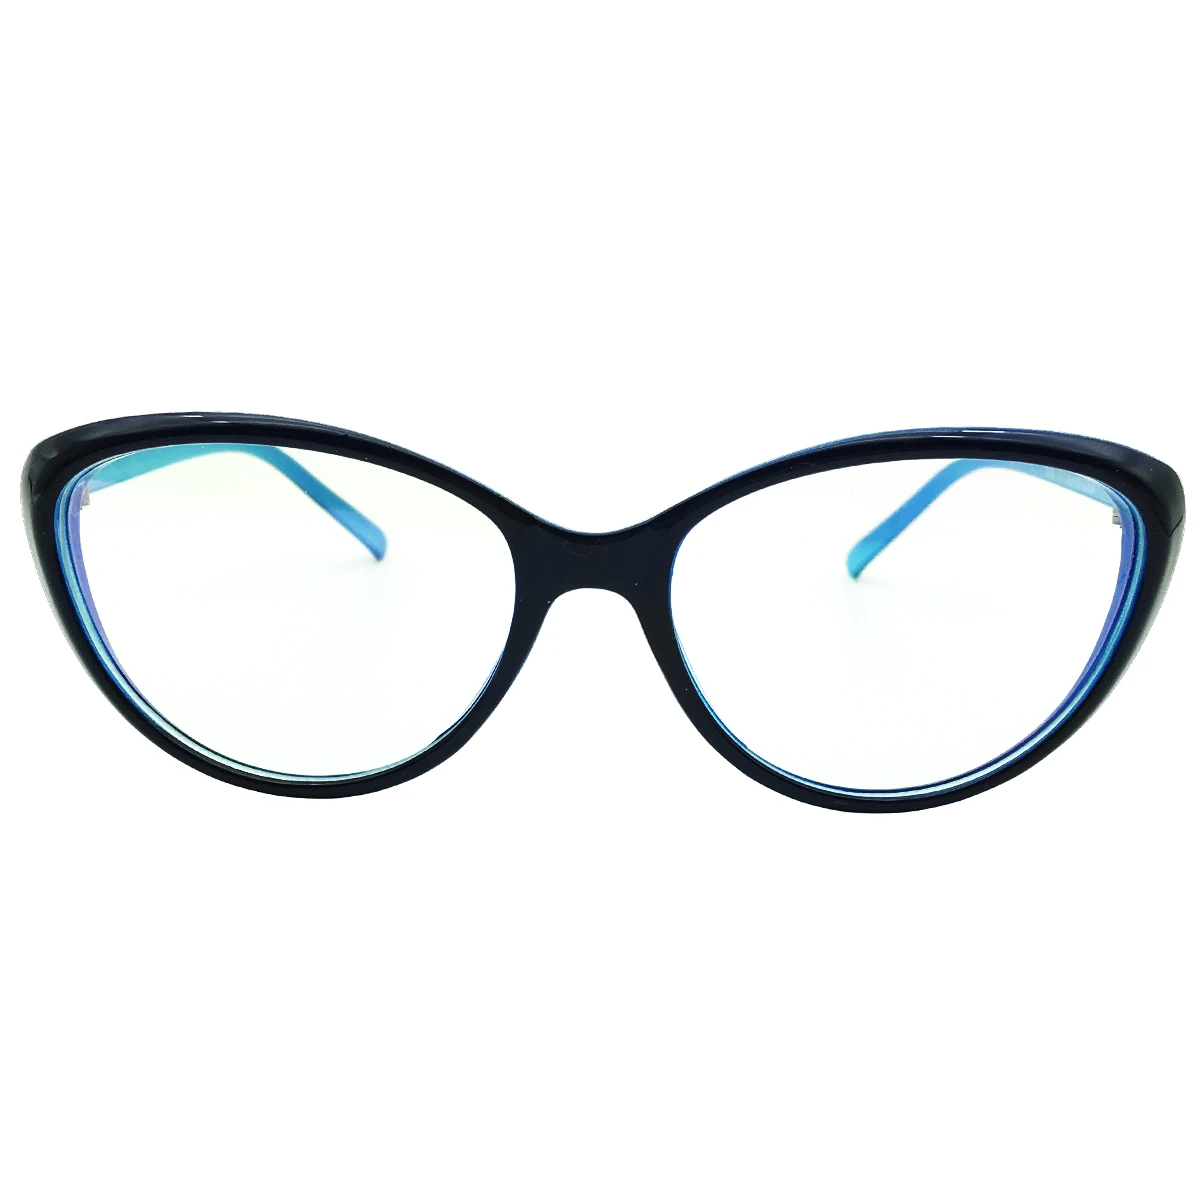 

Ladies Cateye Nearsighted Prescription Glasses Womens Cat Eye Blue Black Frames Gafas Shortsighted Retro Spectacles Myopia New!